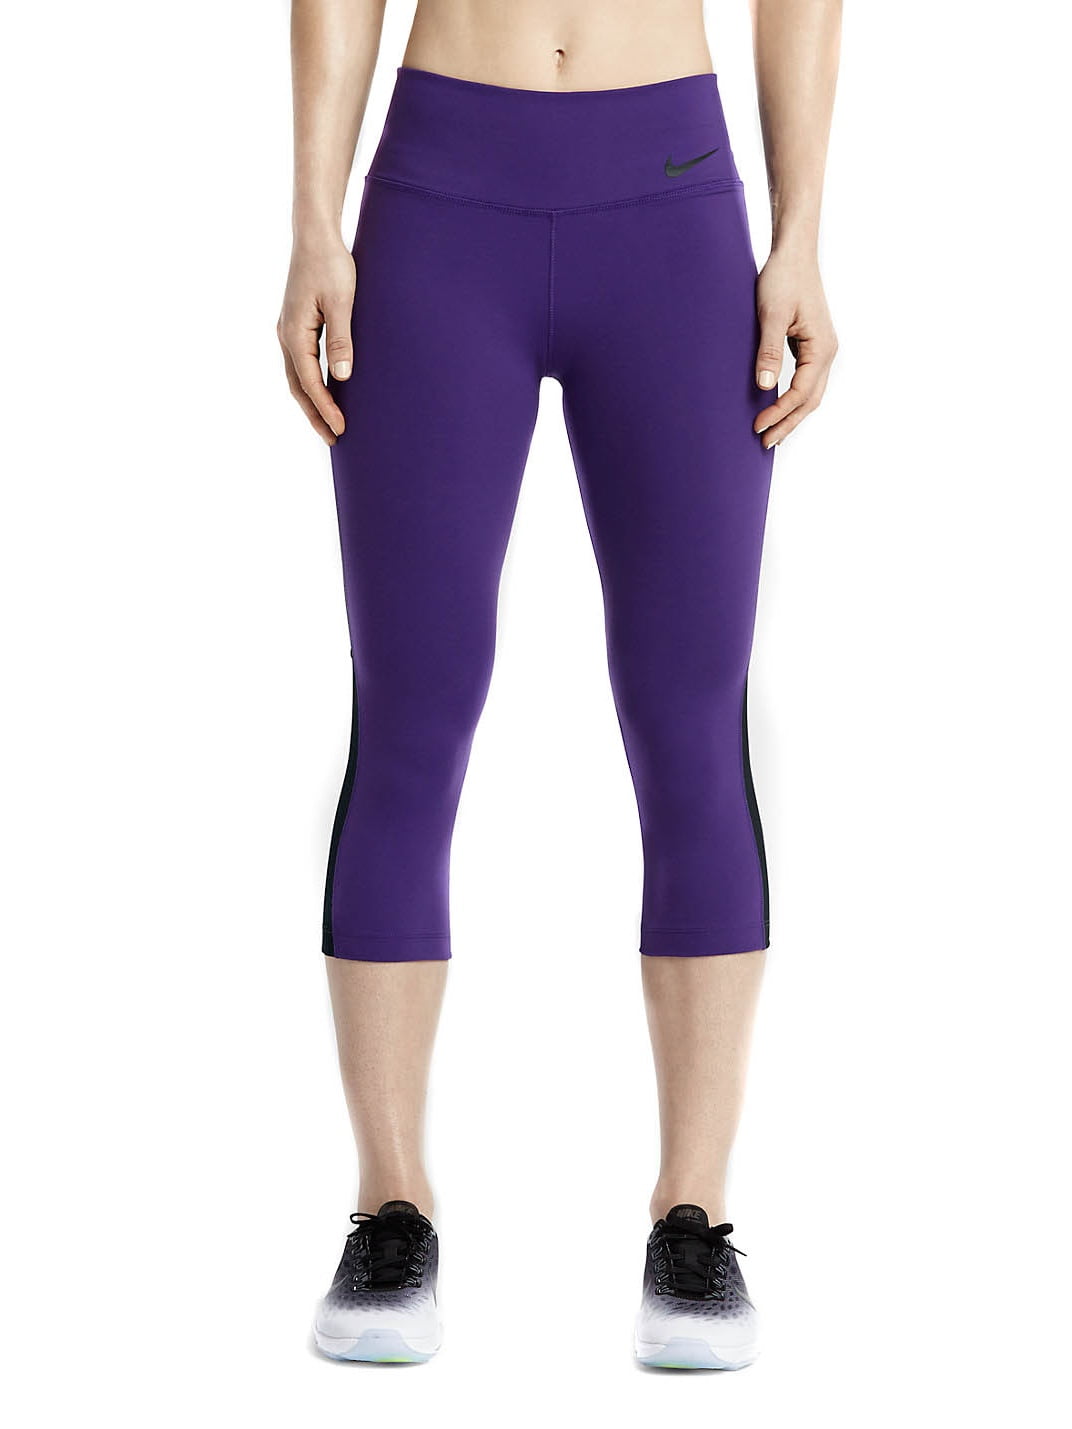 purple capri leggings